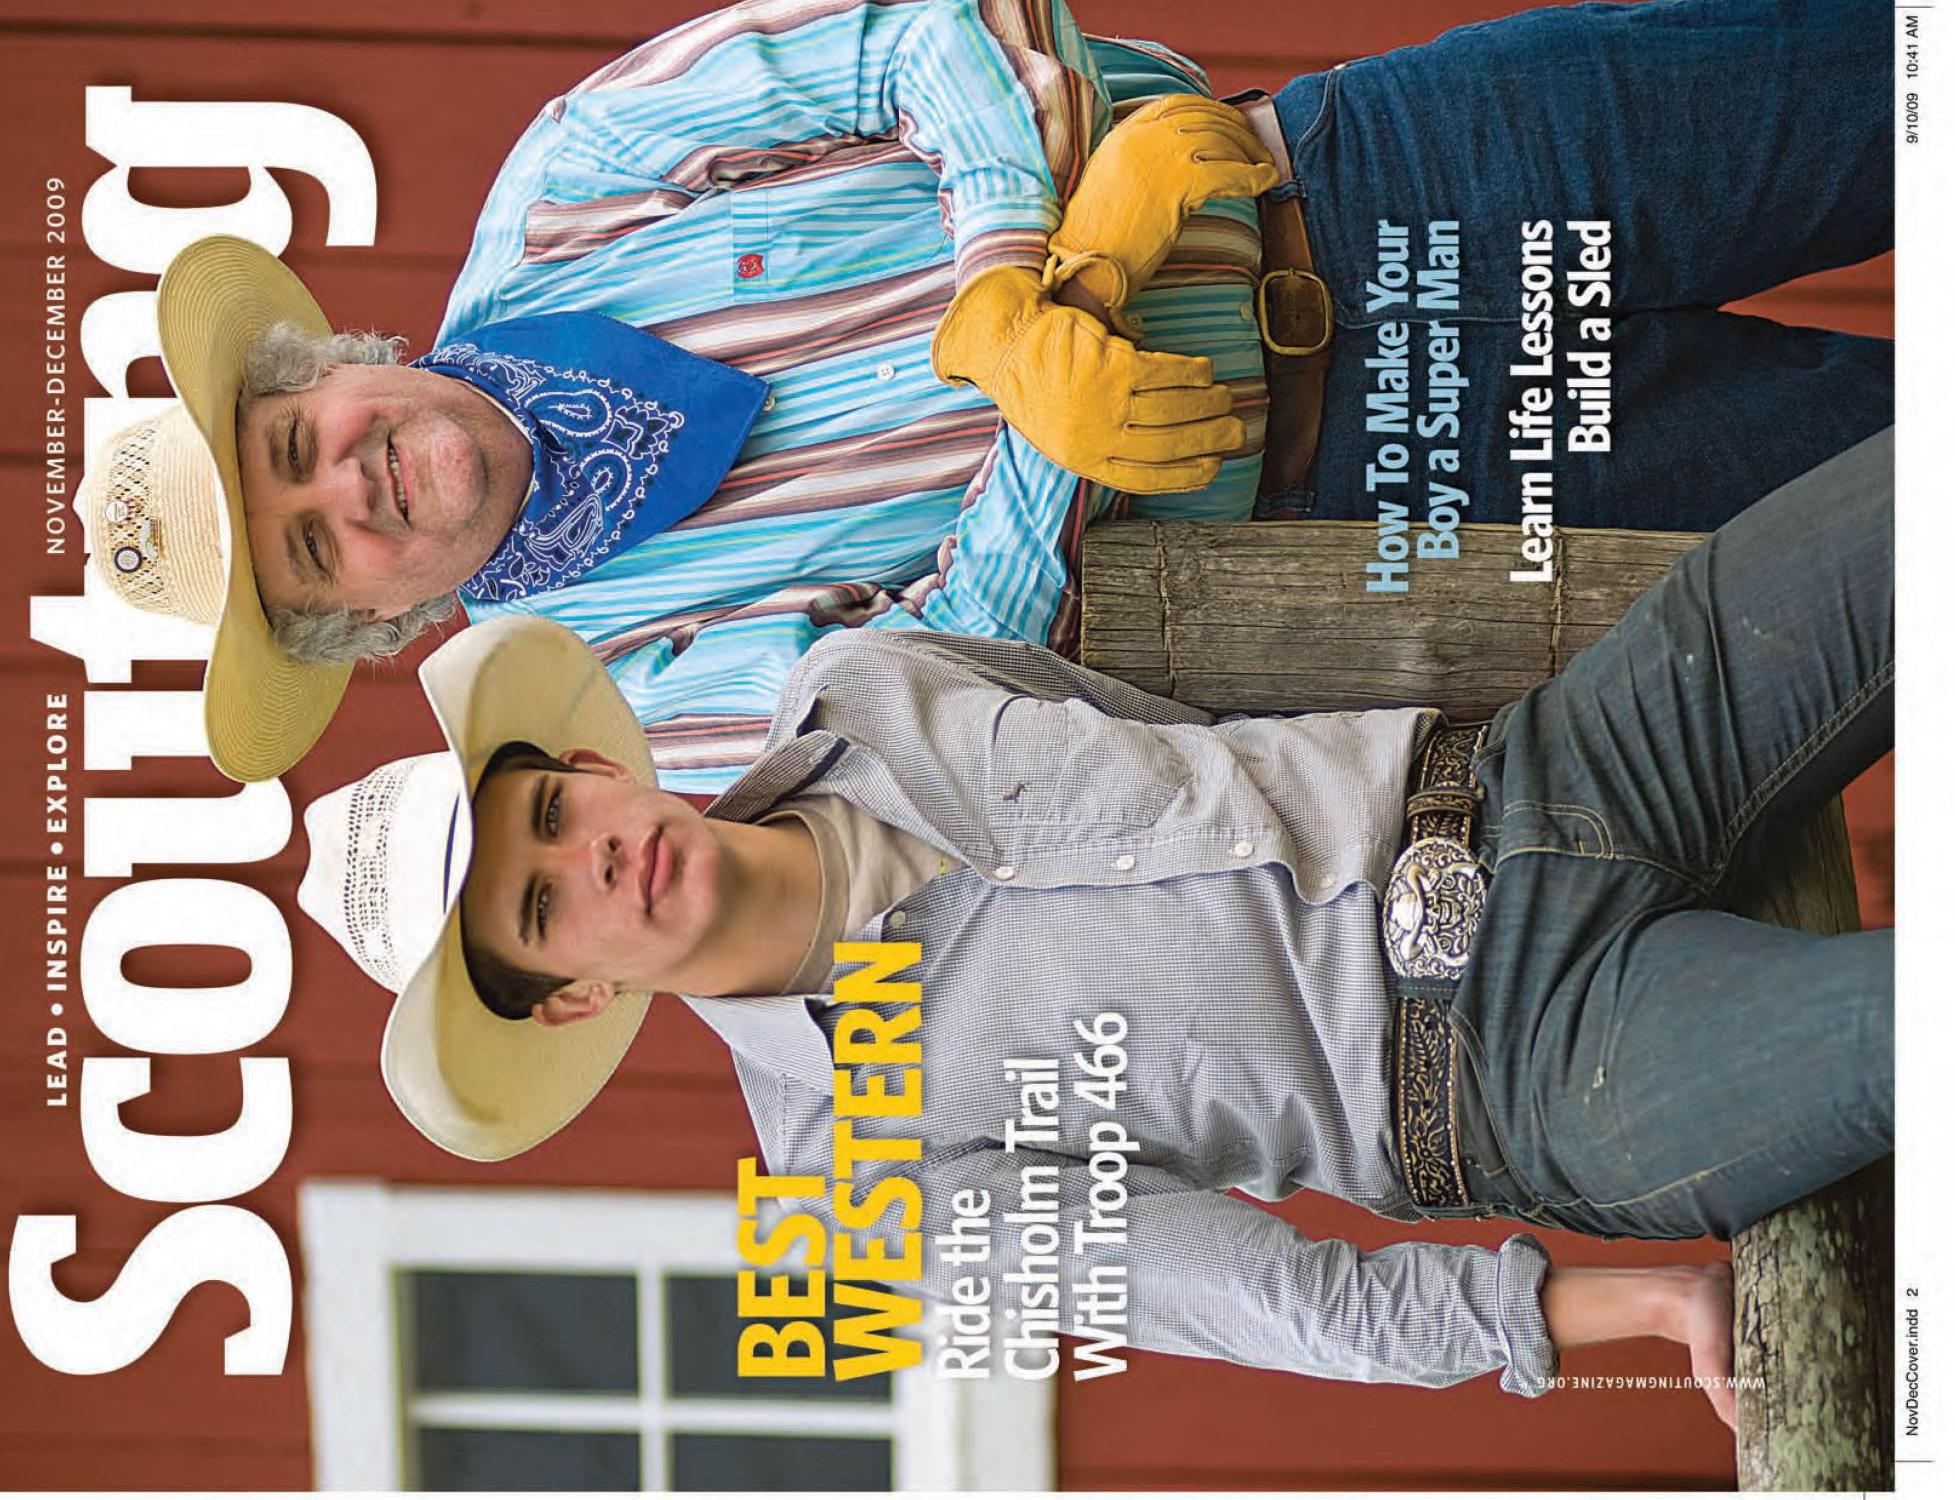 Scouting, Volume 97, Number 5, November-December 2009
                                                
                                                    Front Cover
                                                